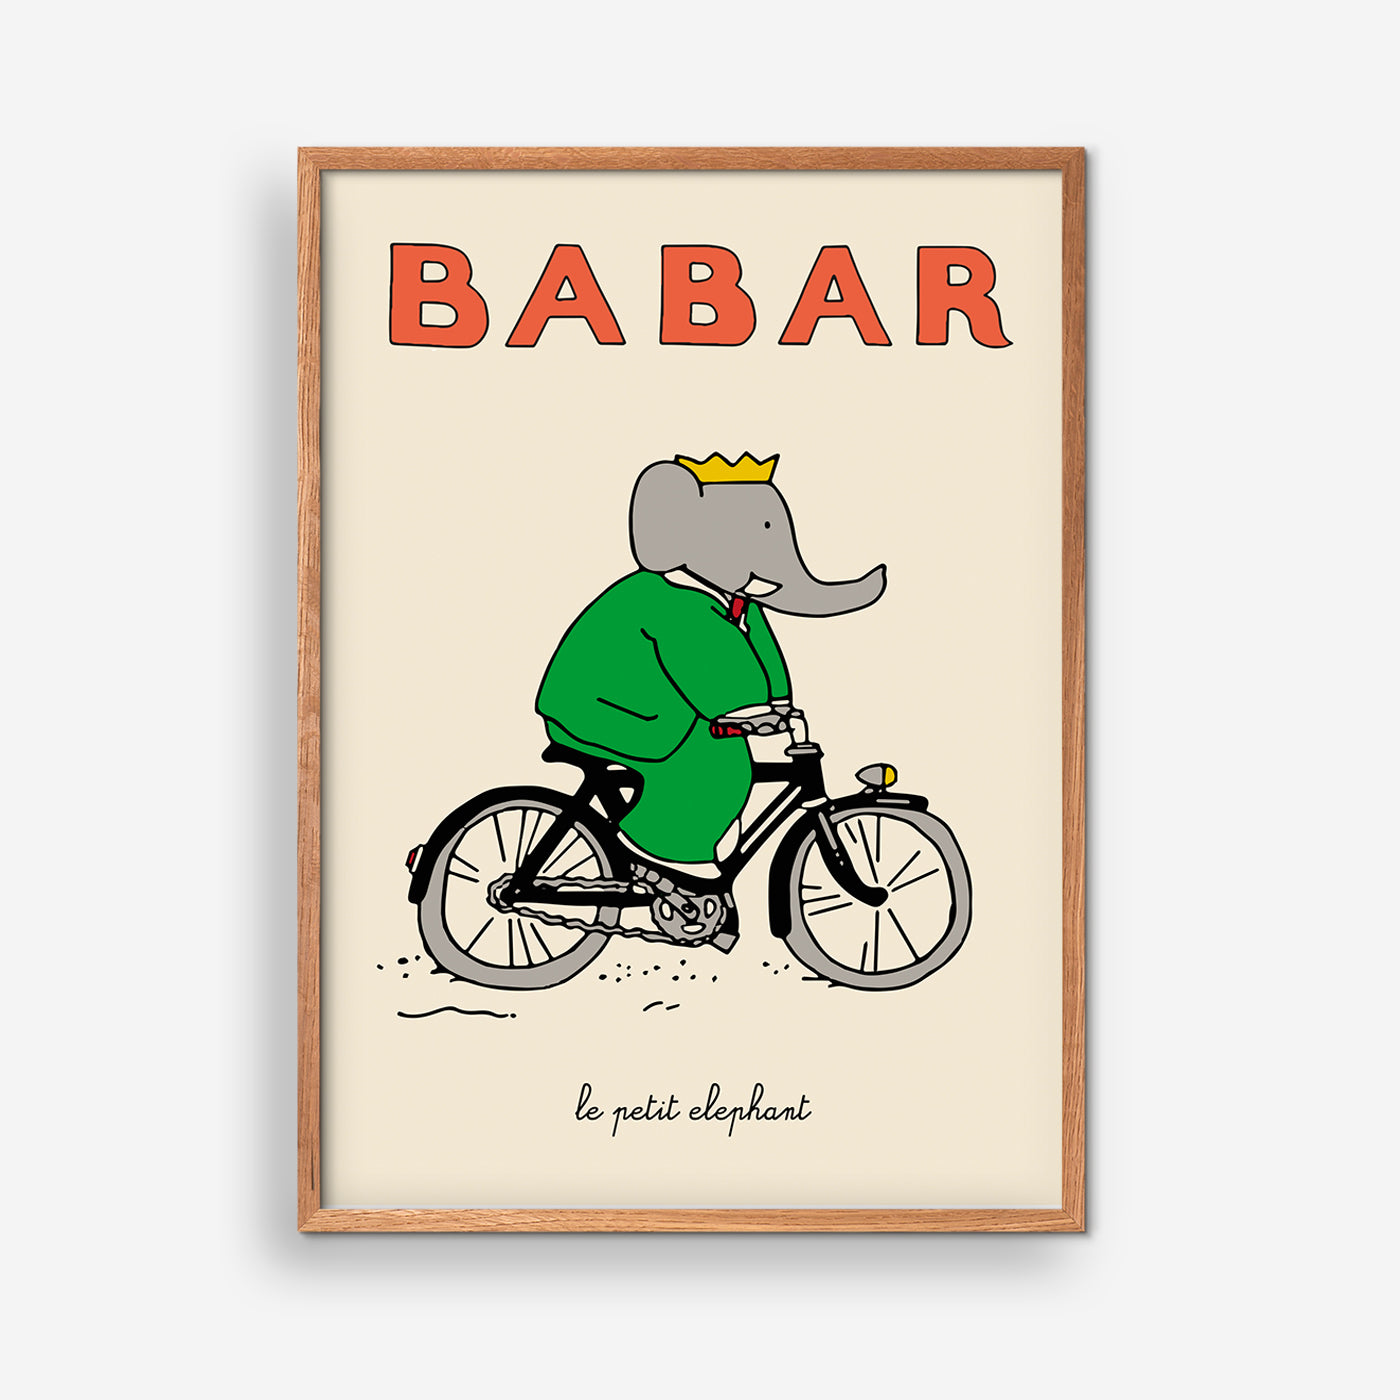 Babar Bicycle - Jean de Brunhoff